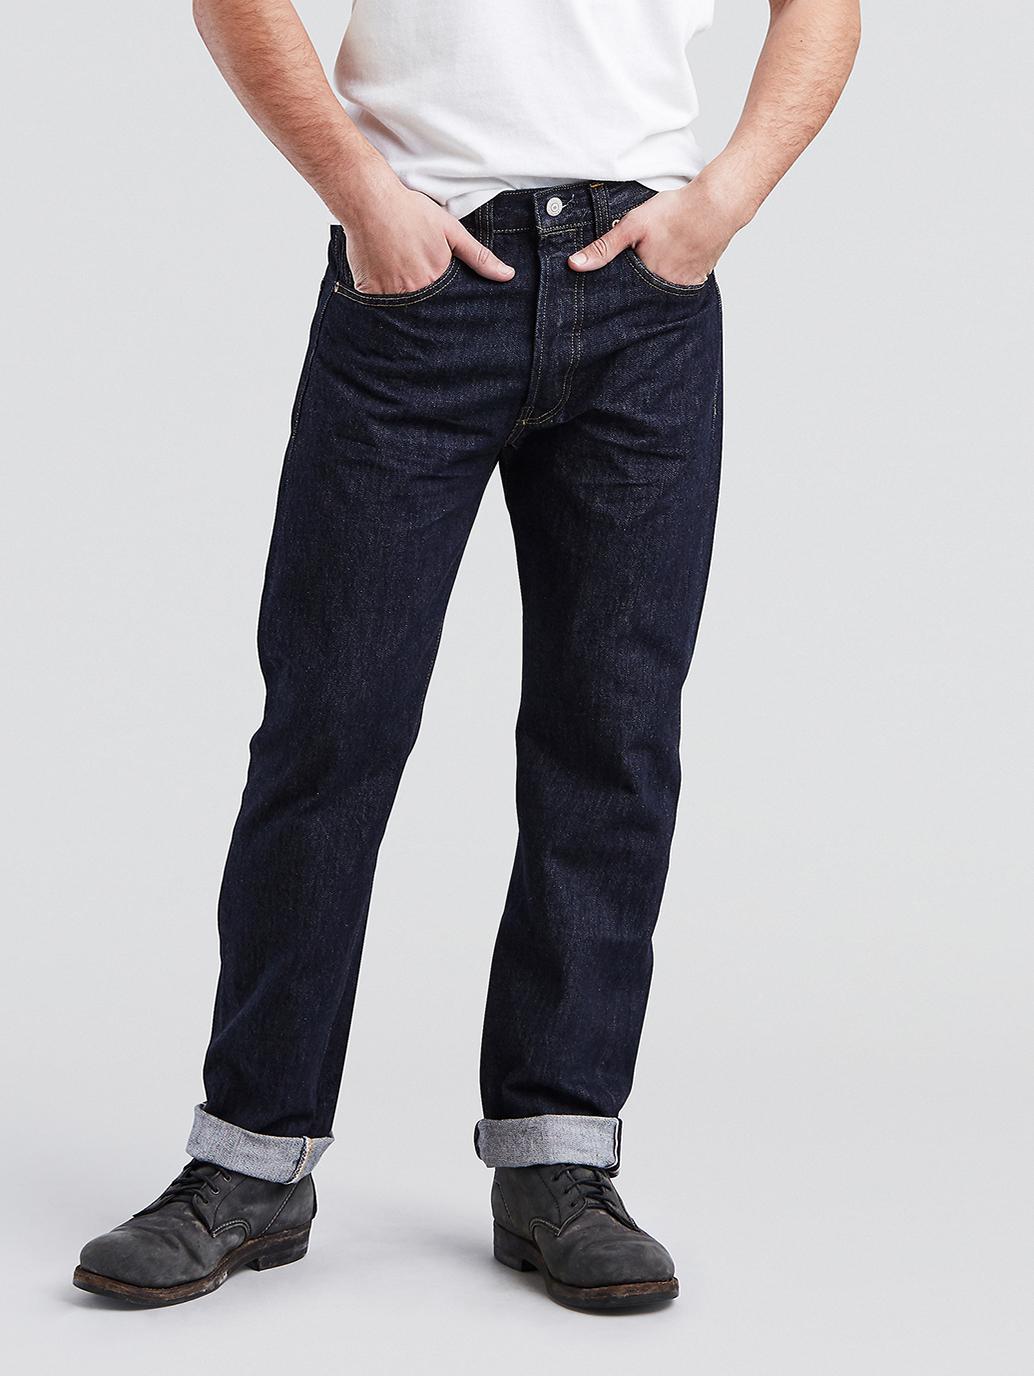 Buy 1937 501 Jeans(LVC collection) | Levi’s Official Online Store HK